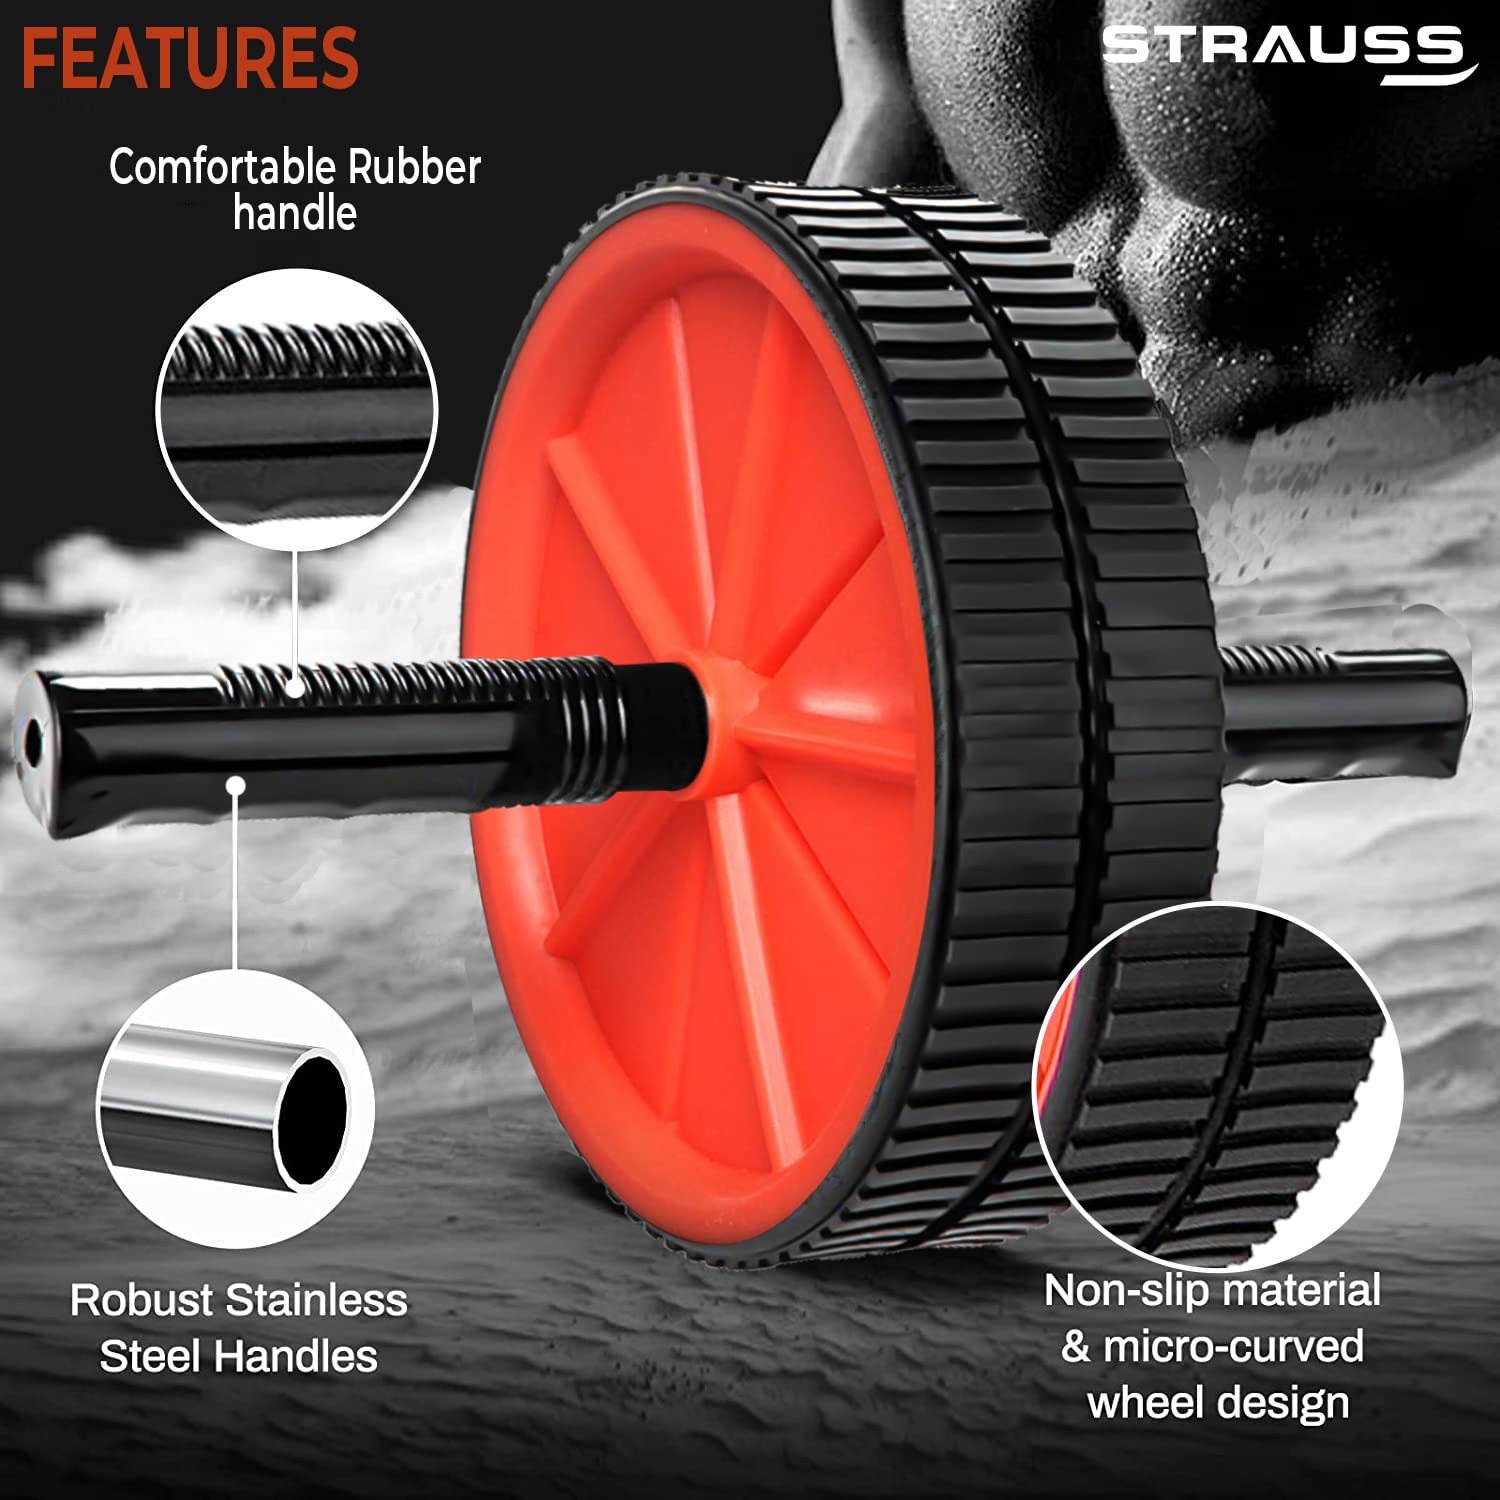 Strauss Premium Exercise wheel Ab Roller with PVC Handles, (Orange)